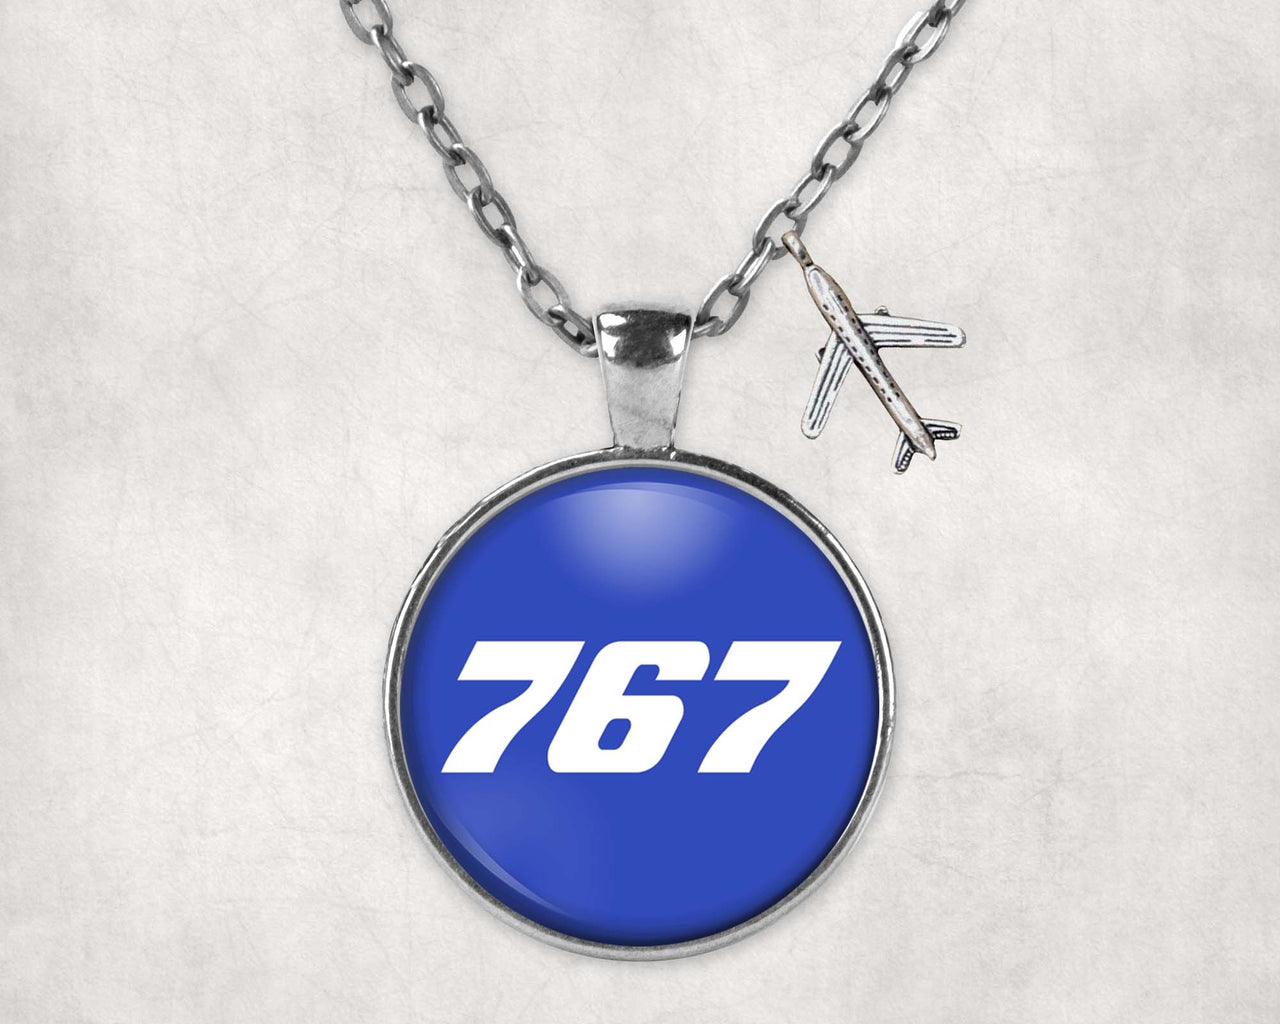 767 Flat Text Designed Necklaces